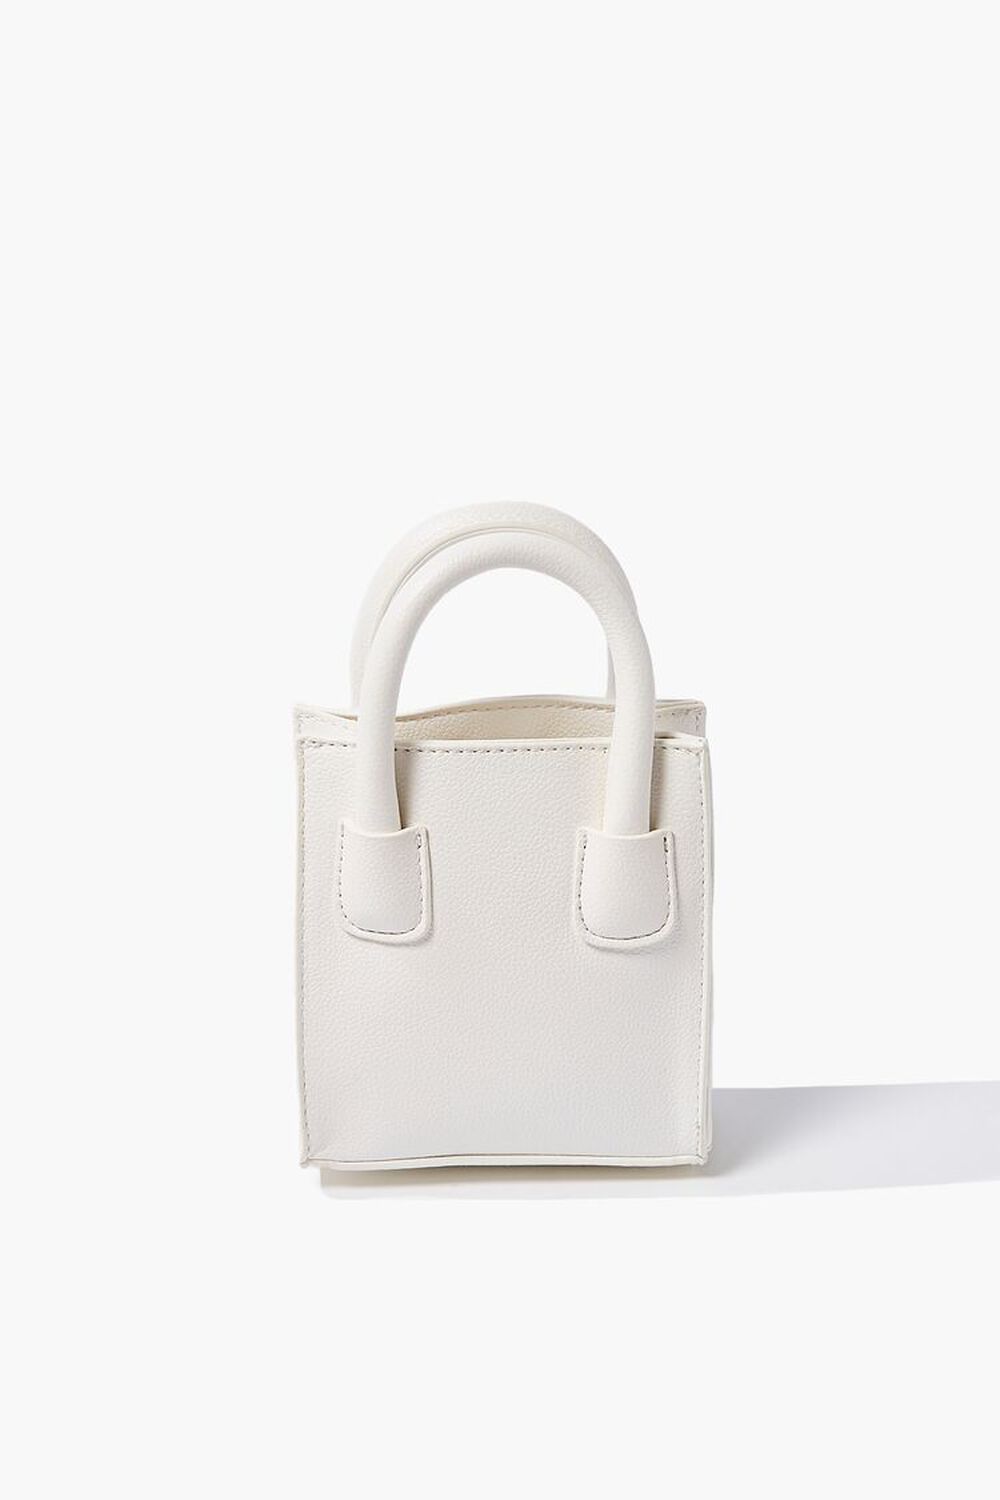 WHITE Mini Faux Leather Crossbody Bag, image 1